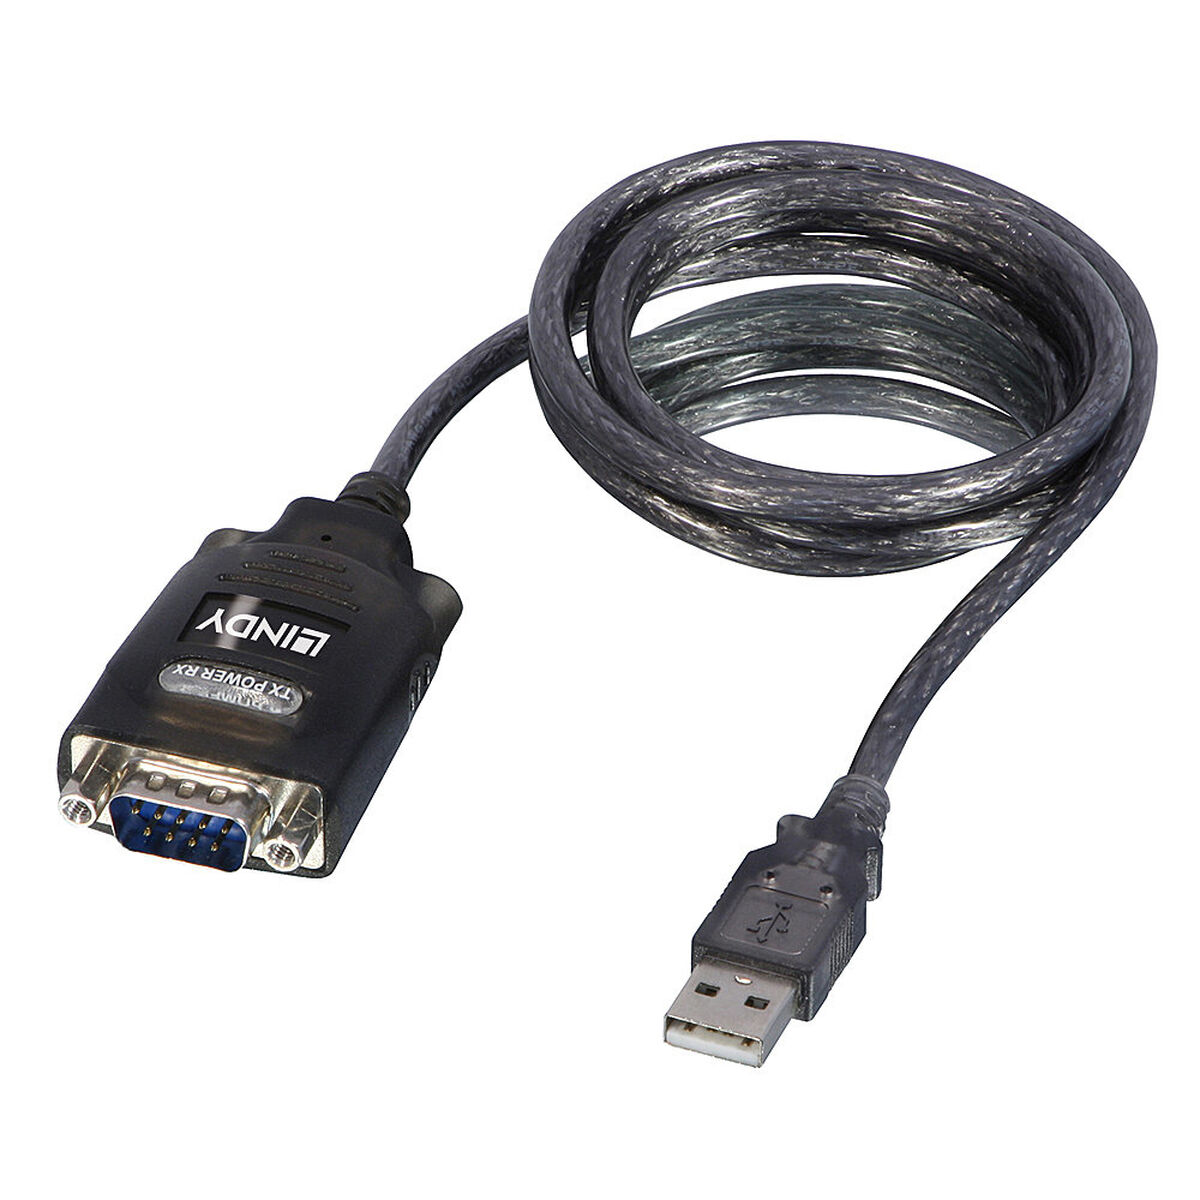 LINDY 42686 USB-zu-RS232-Adapter, mehrfarbig